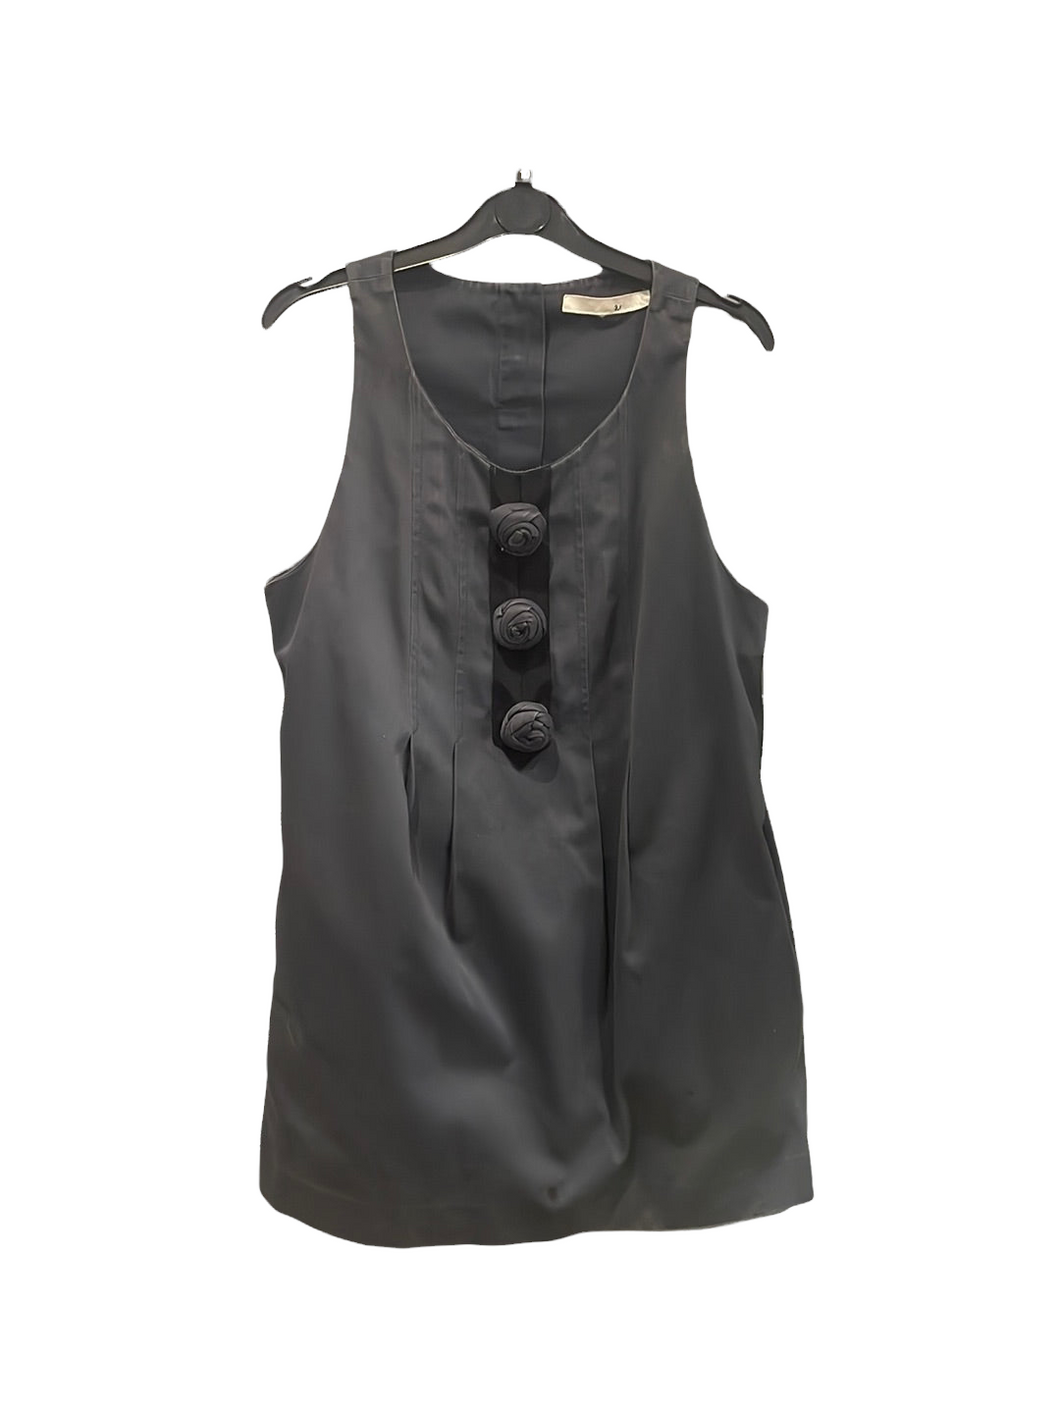 Phillip Lim 3.1 sleeveless dress. Size 12-14